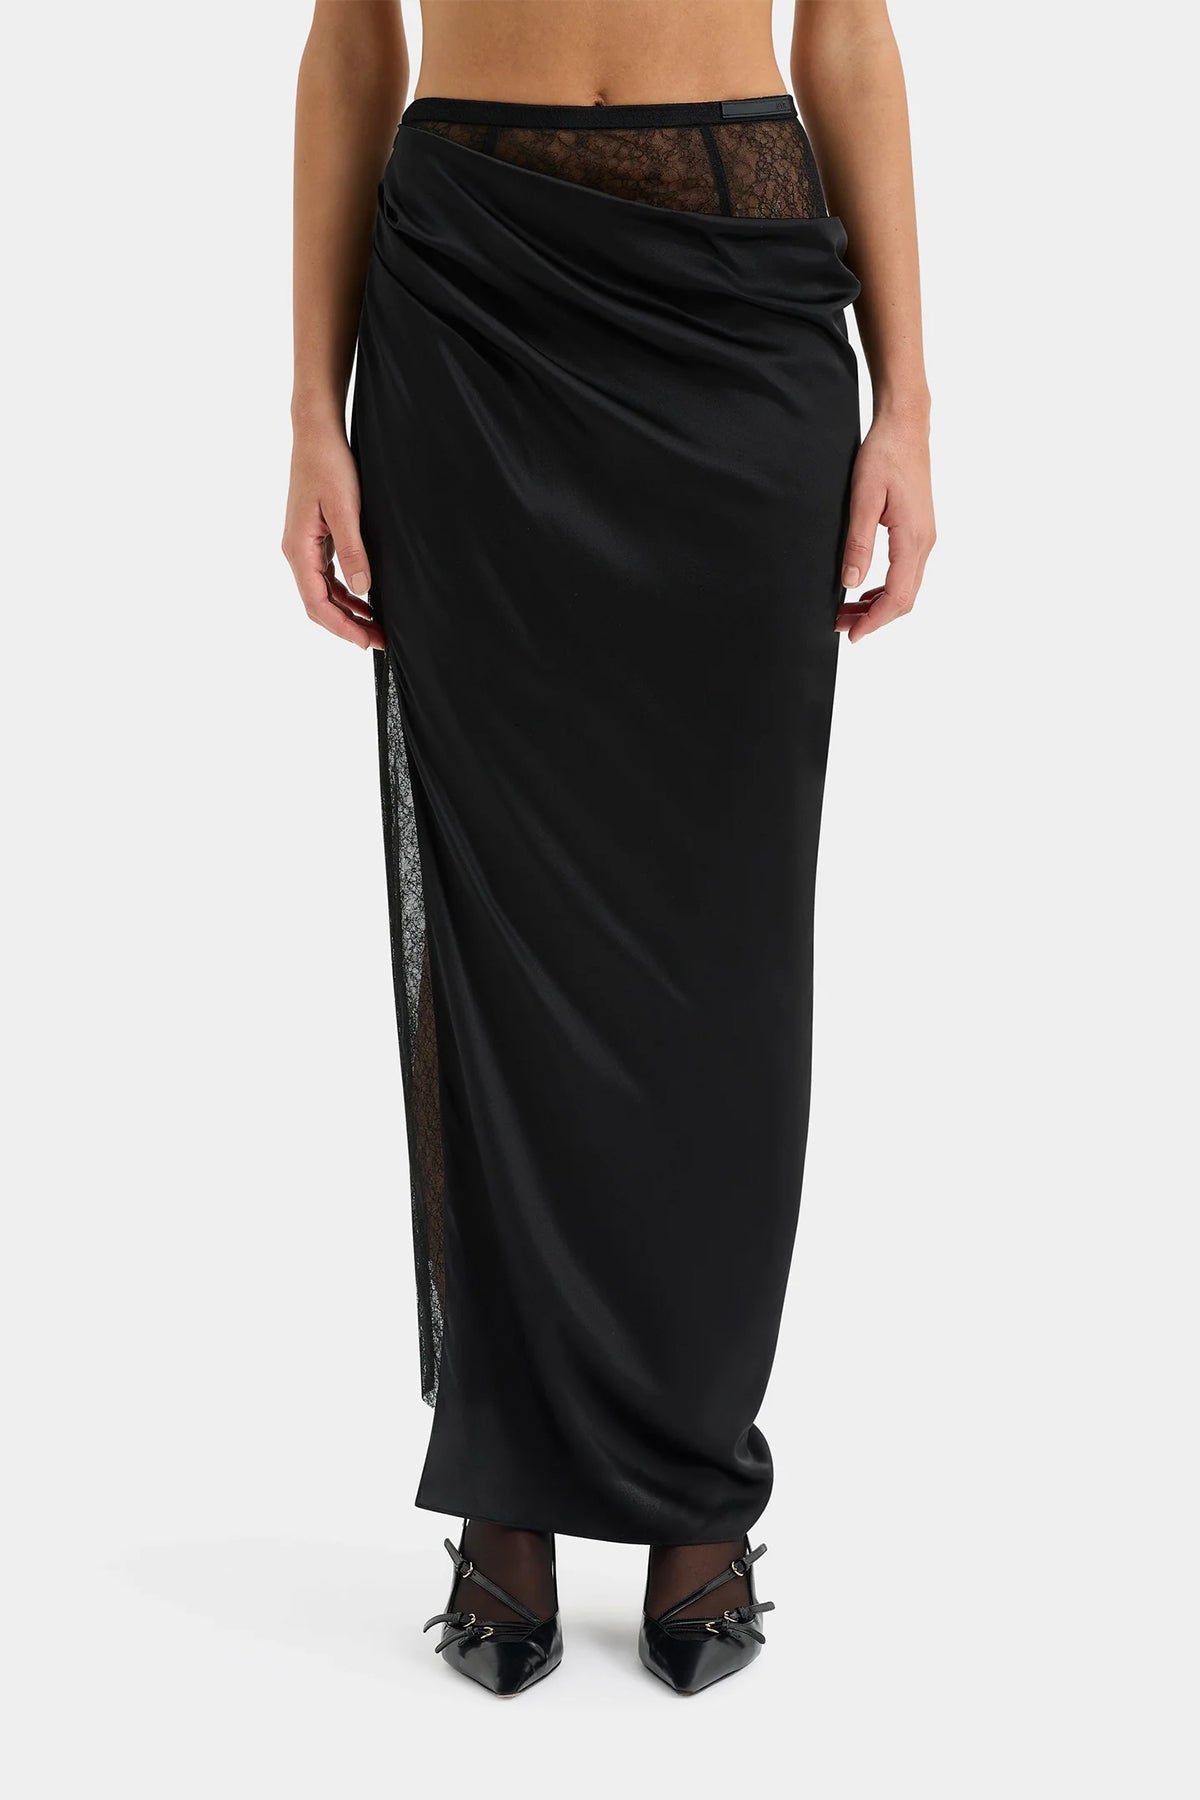 Dunya Draped Skirt in Black - shop - olivia.com